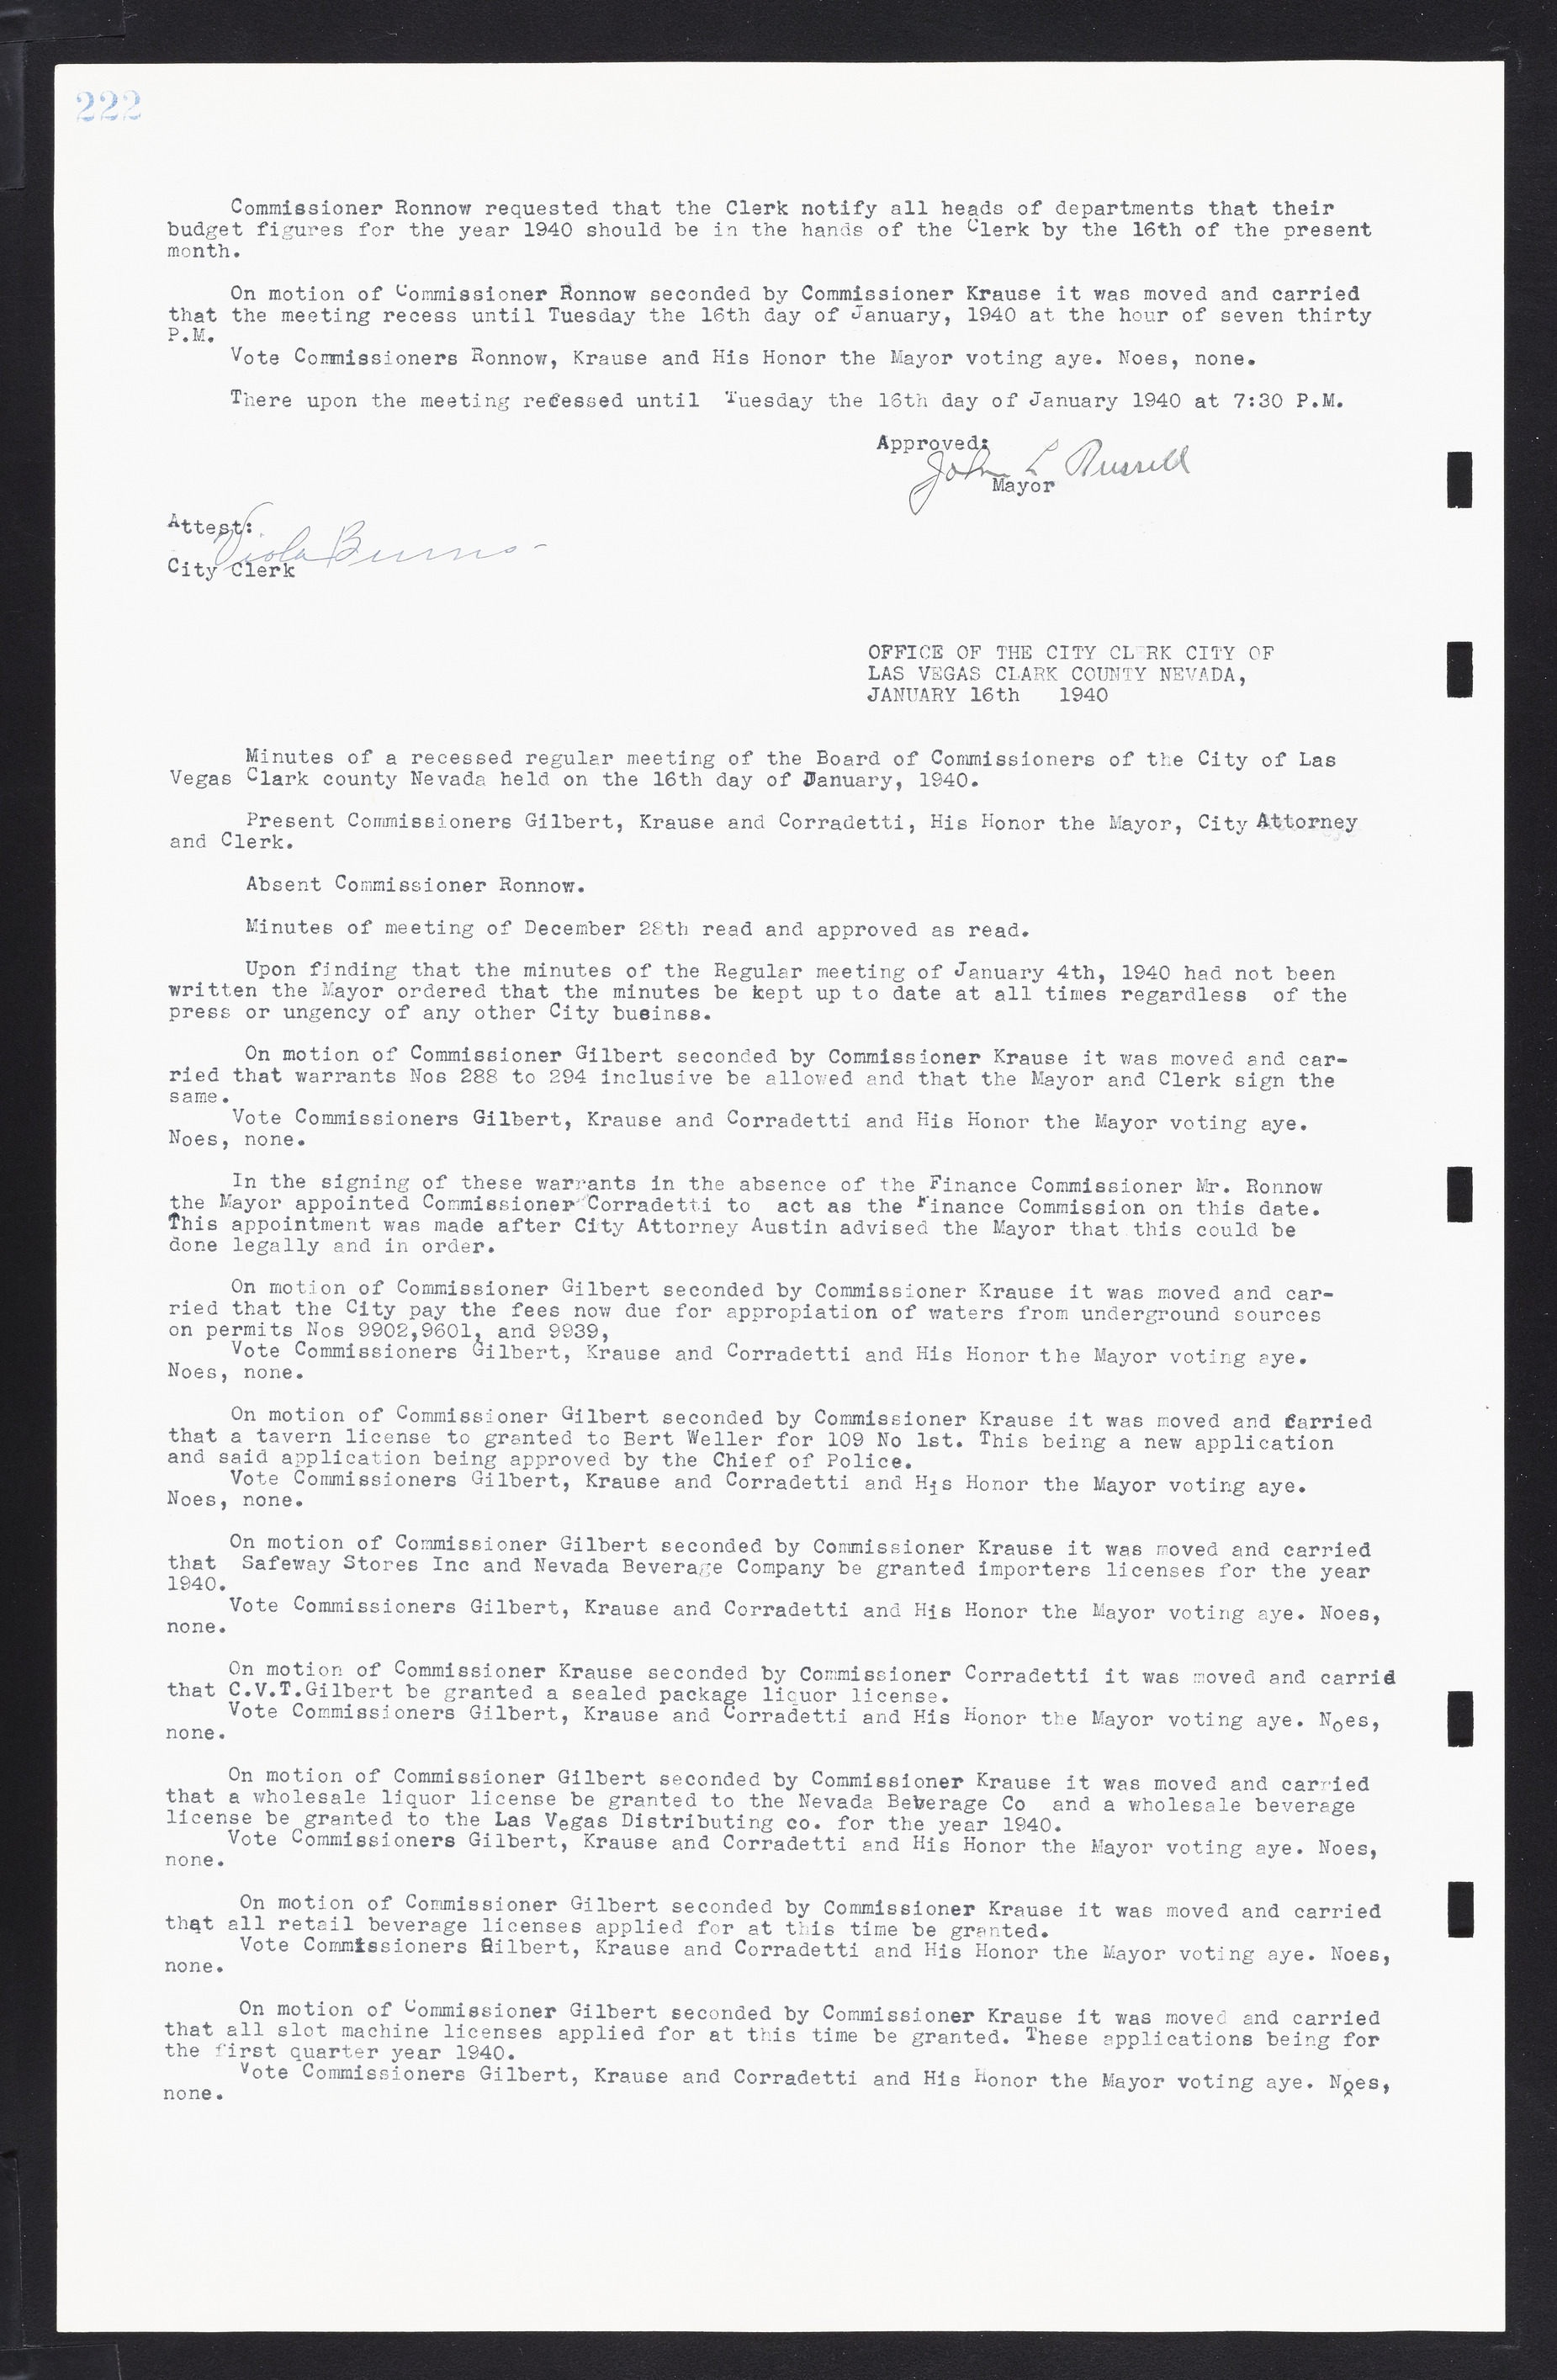 Las Vegas City Commission Minutes, February 17, 1937 to August 4, 1942, lvc000004-242